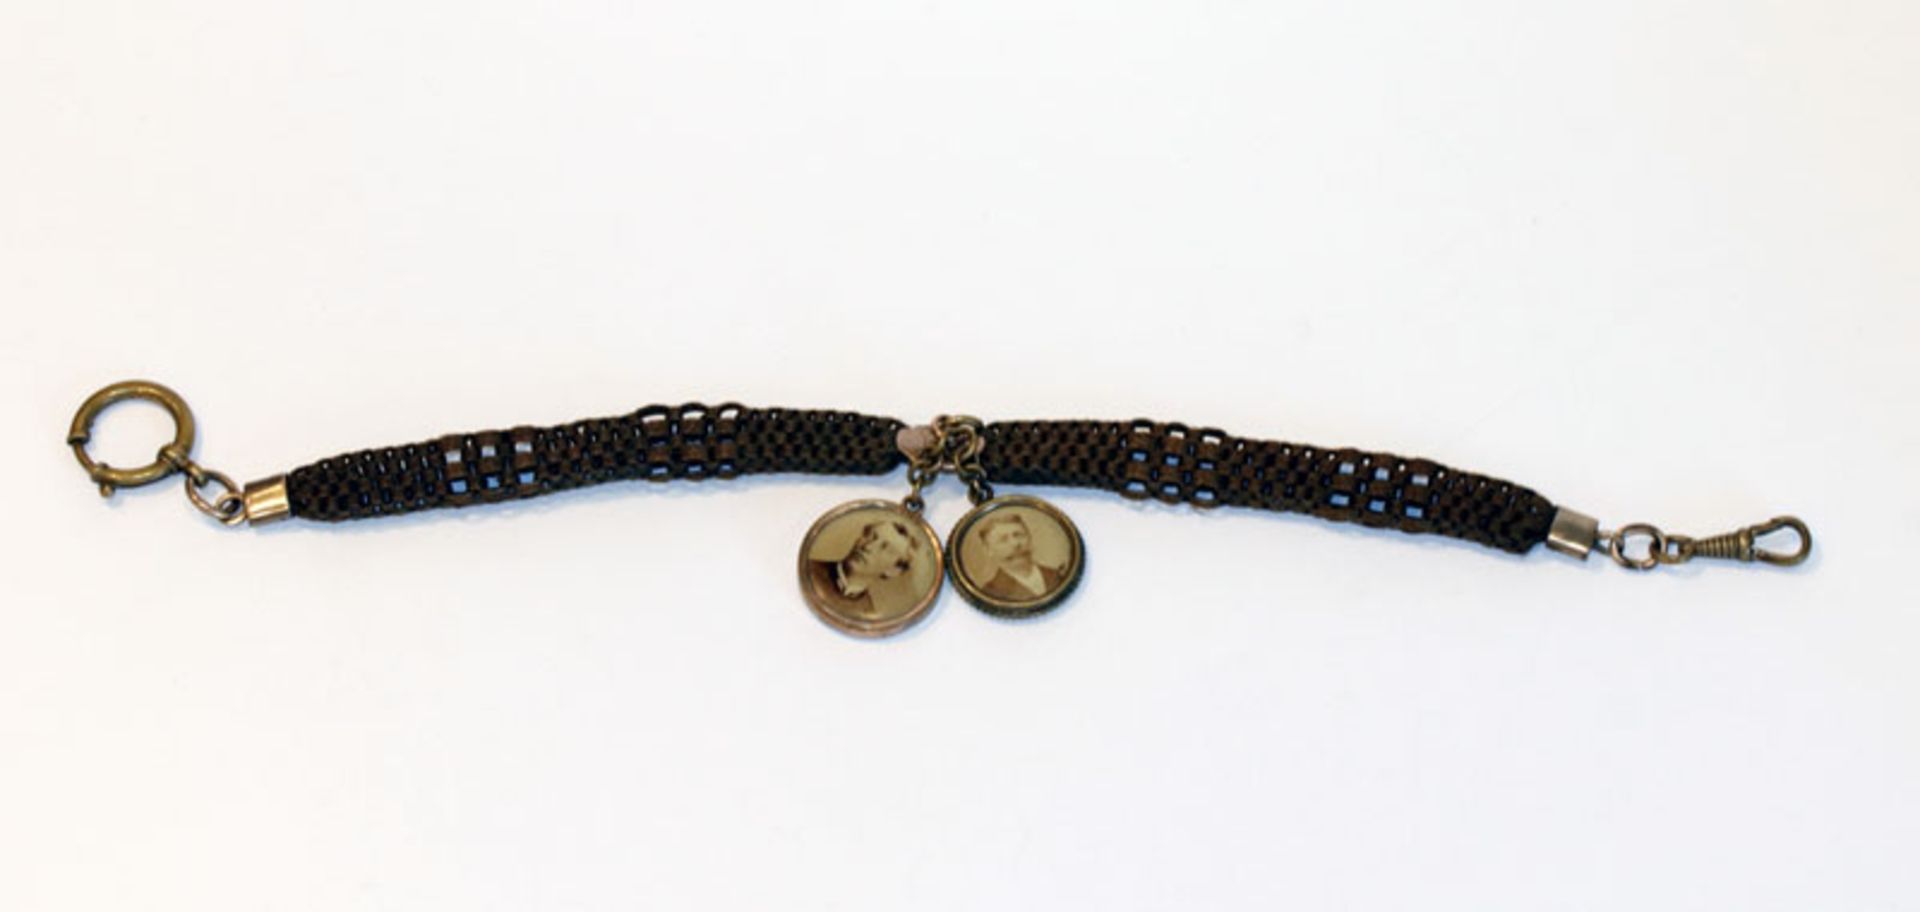 Haar Uhrenkette, geflochten, datiert 1834, mit 2 Fotoanhänger, L 28 cm, Altersspuren